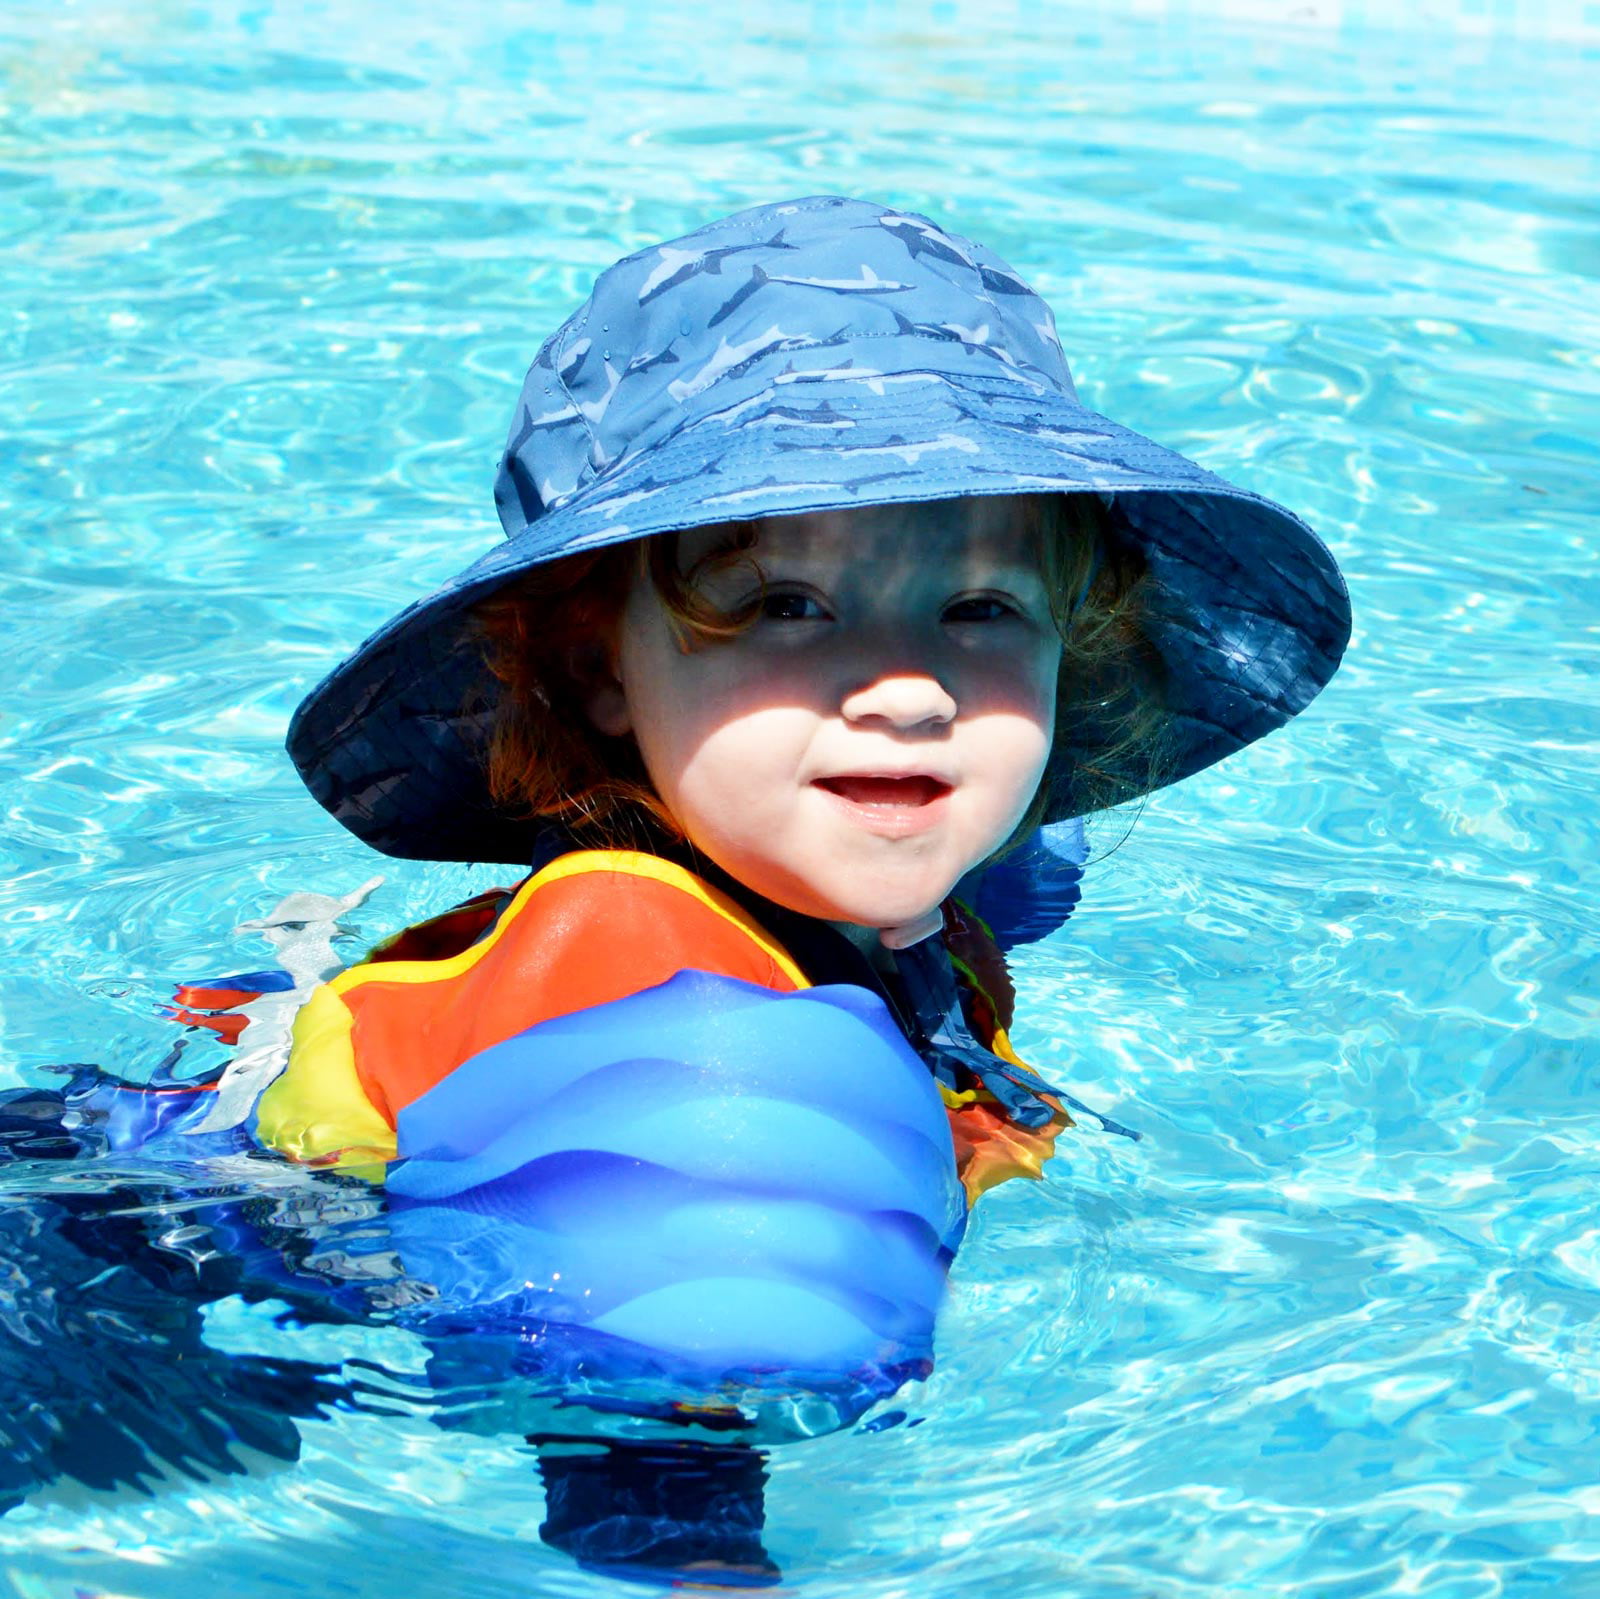 Chin Strap 0/18 Details about   NWT Disney Stitch Swim Sun Hat For Baby Size 0-6 Months UPF 50